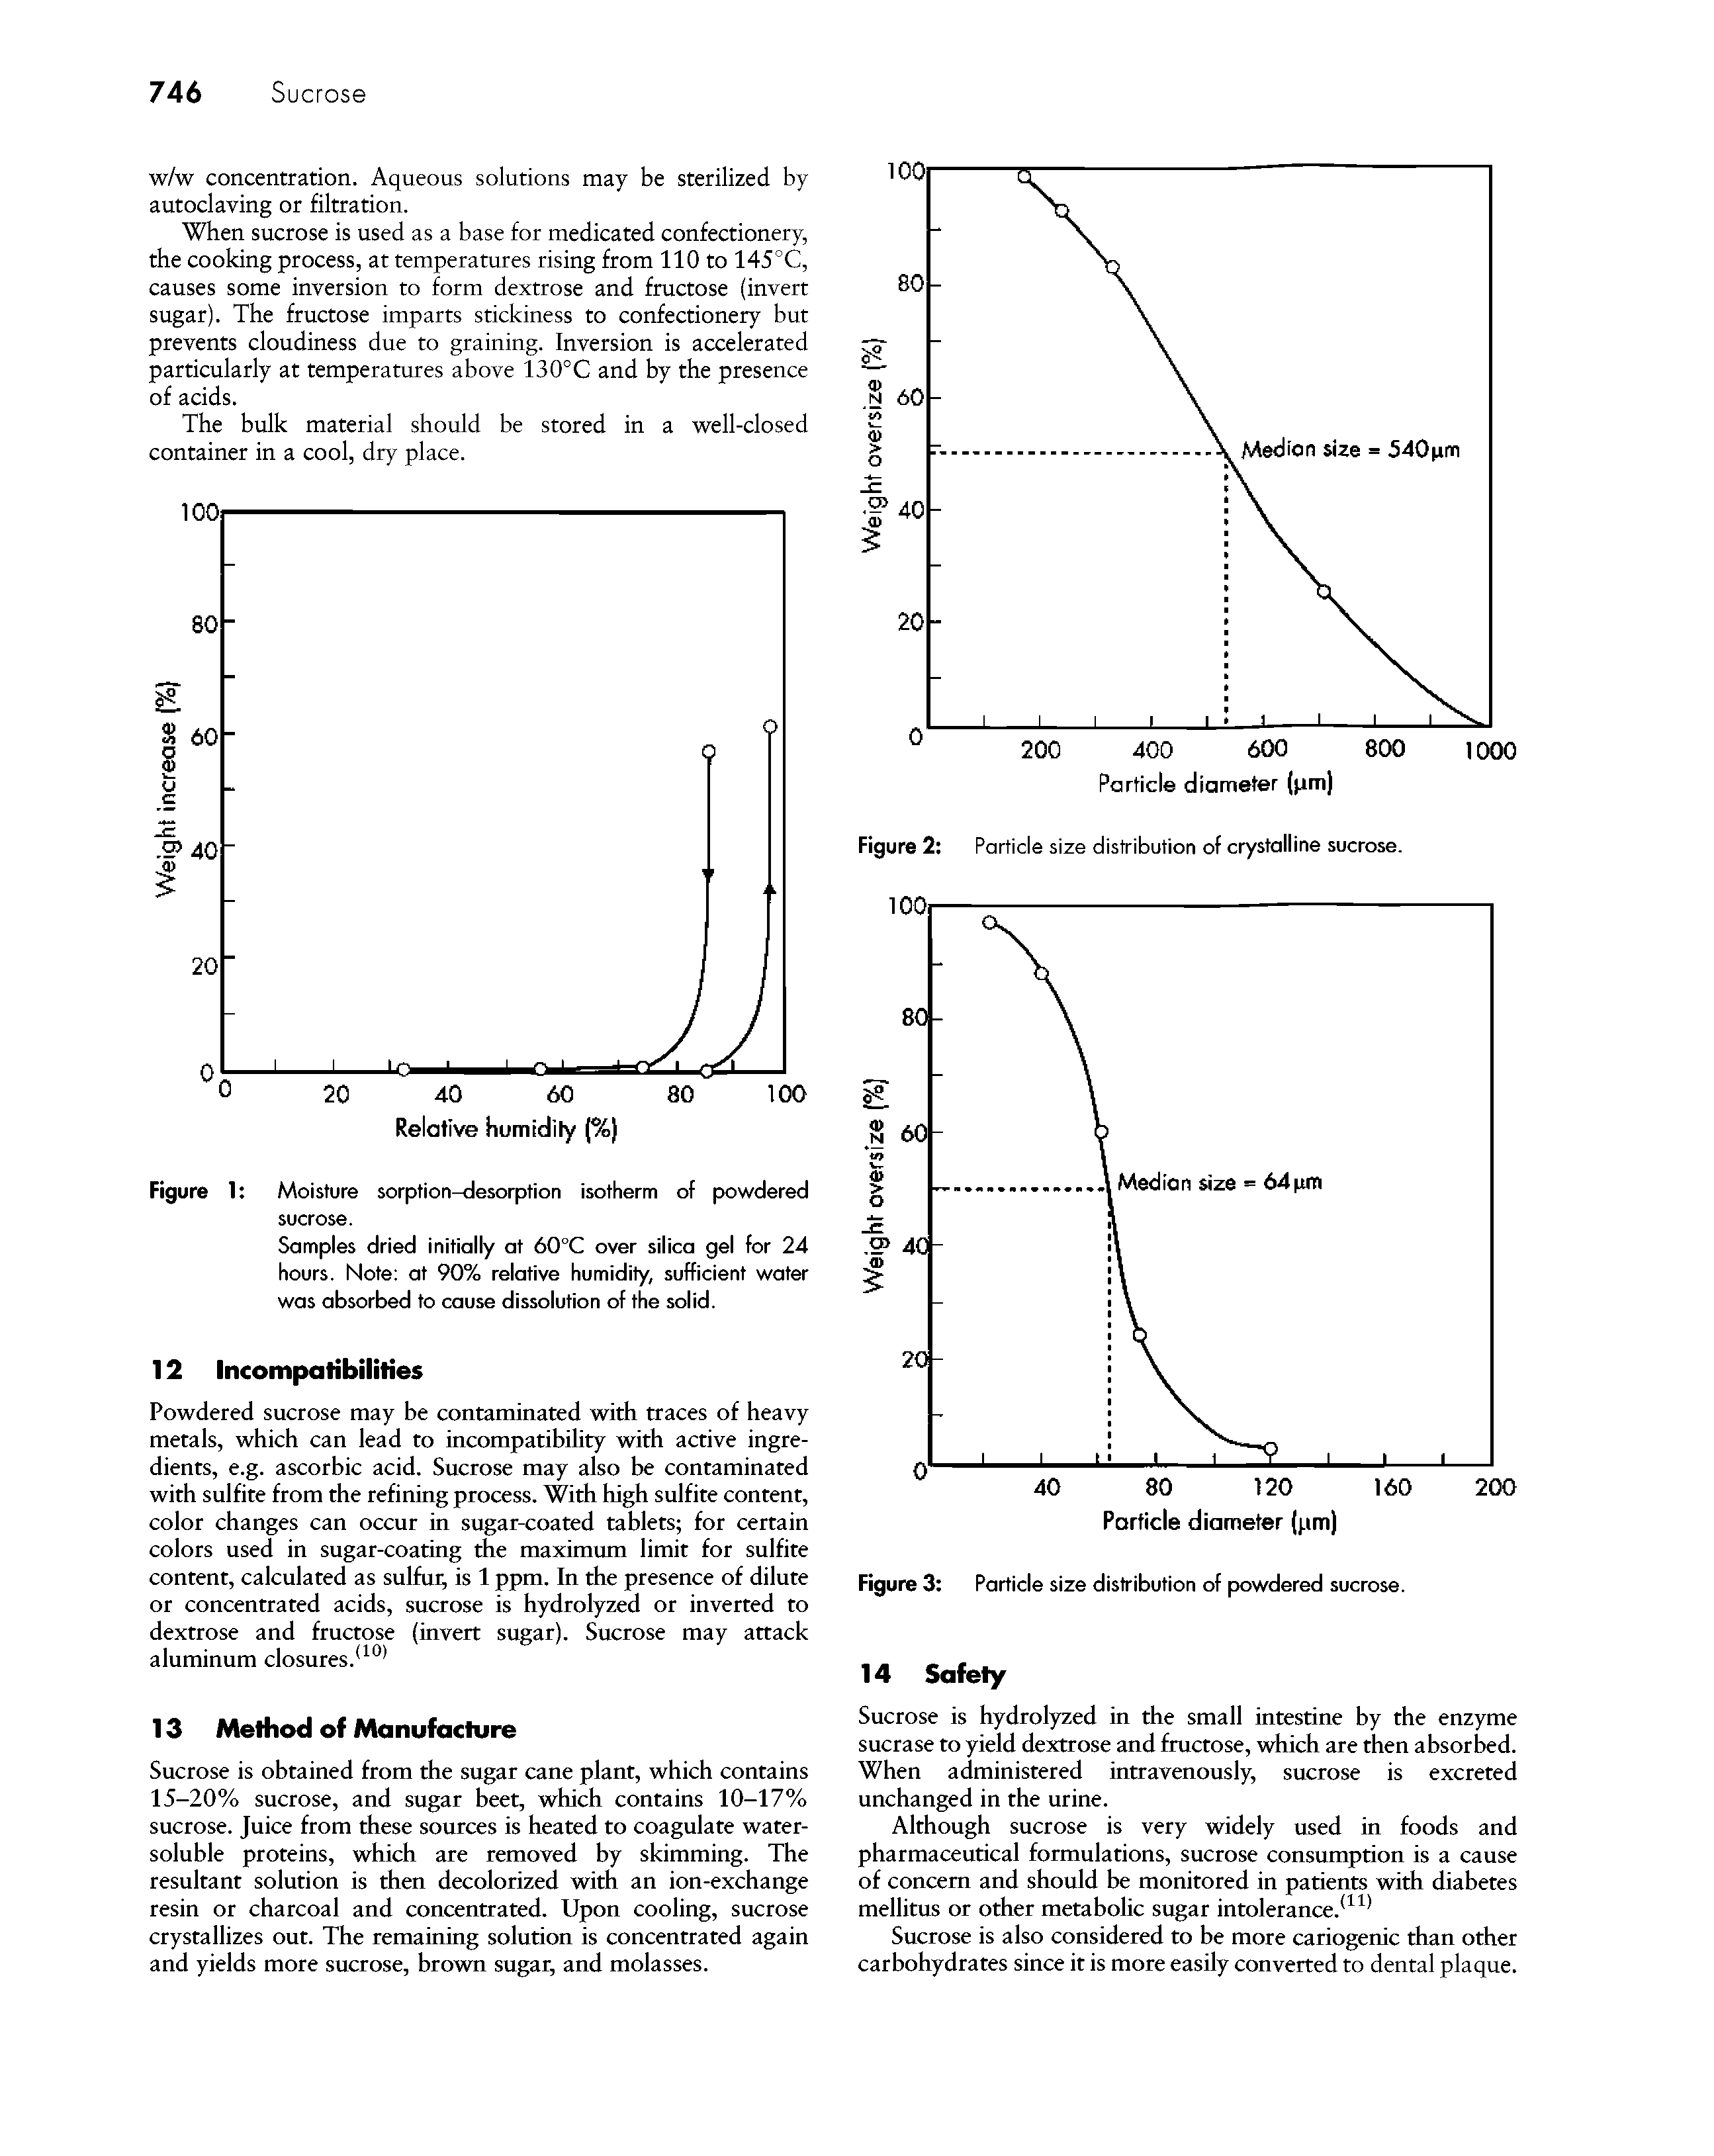 Figure 1 Moisture sorption-desorption isotherm of powdered sucrose.